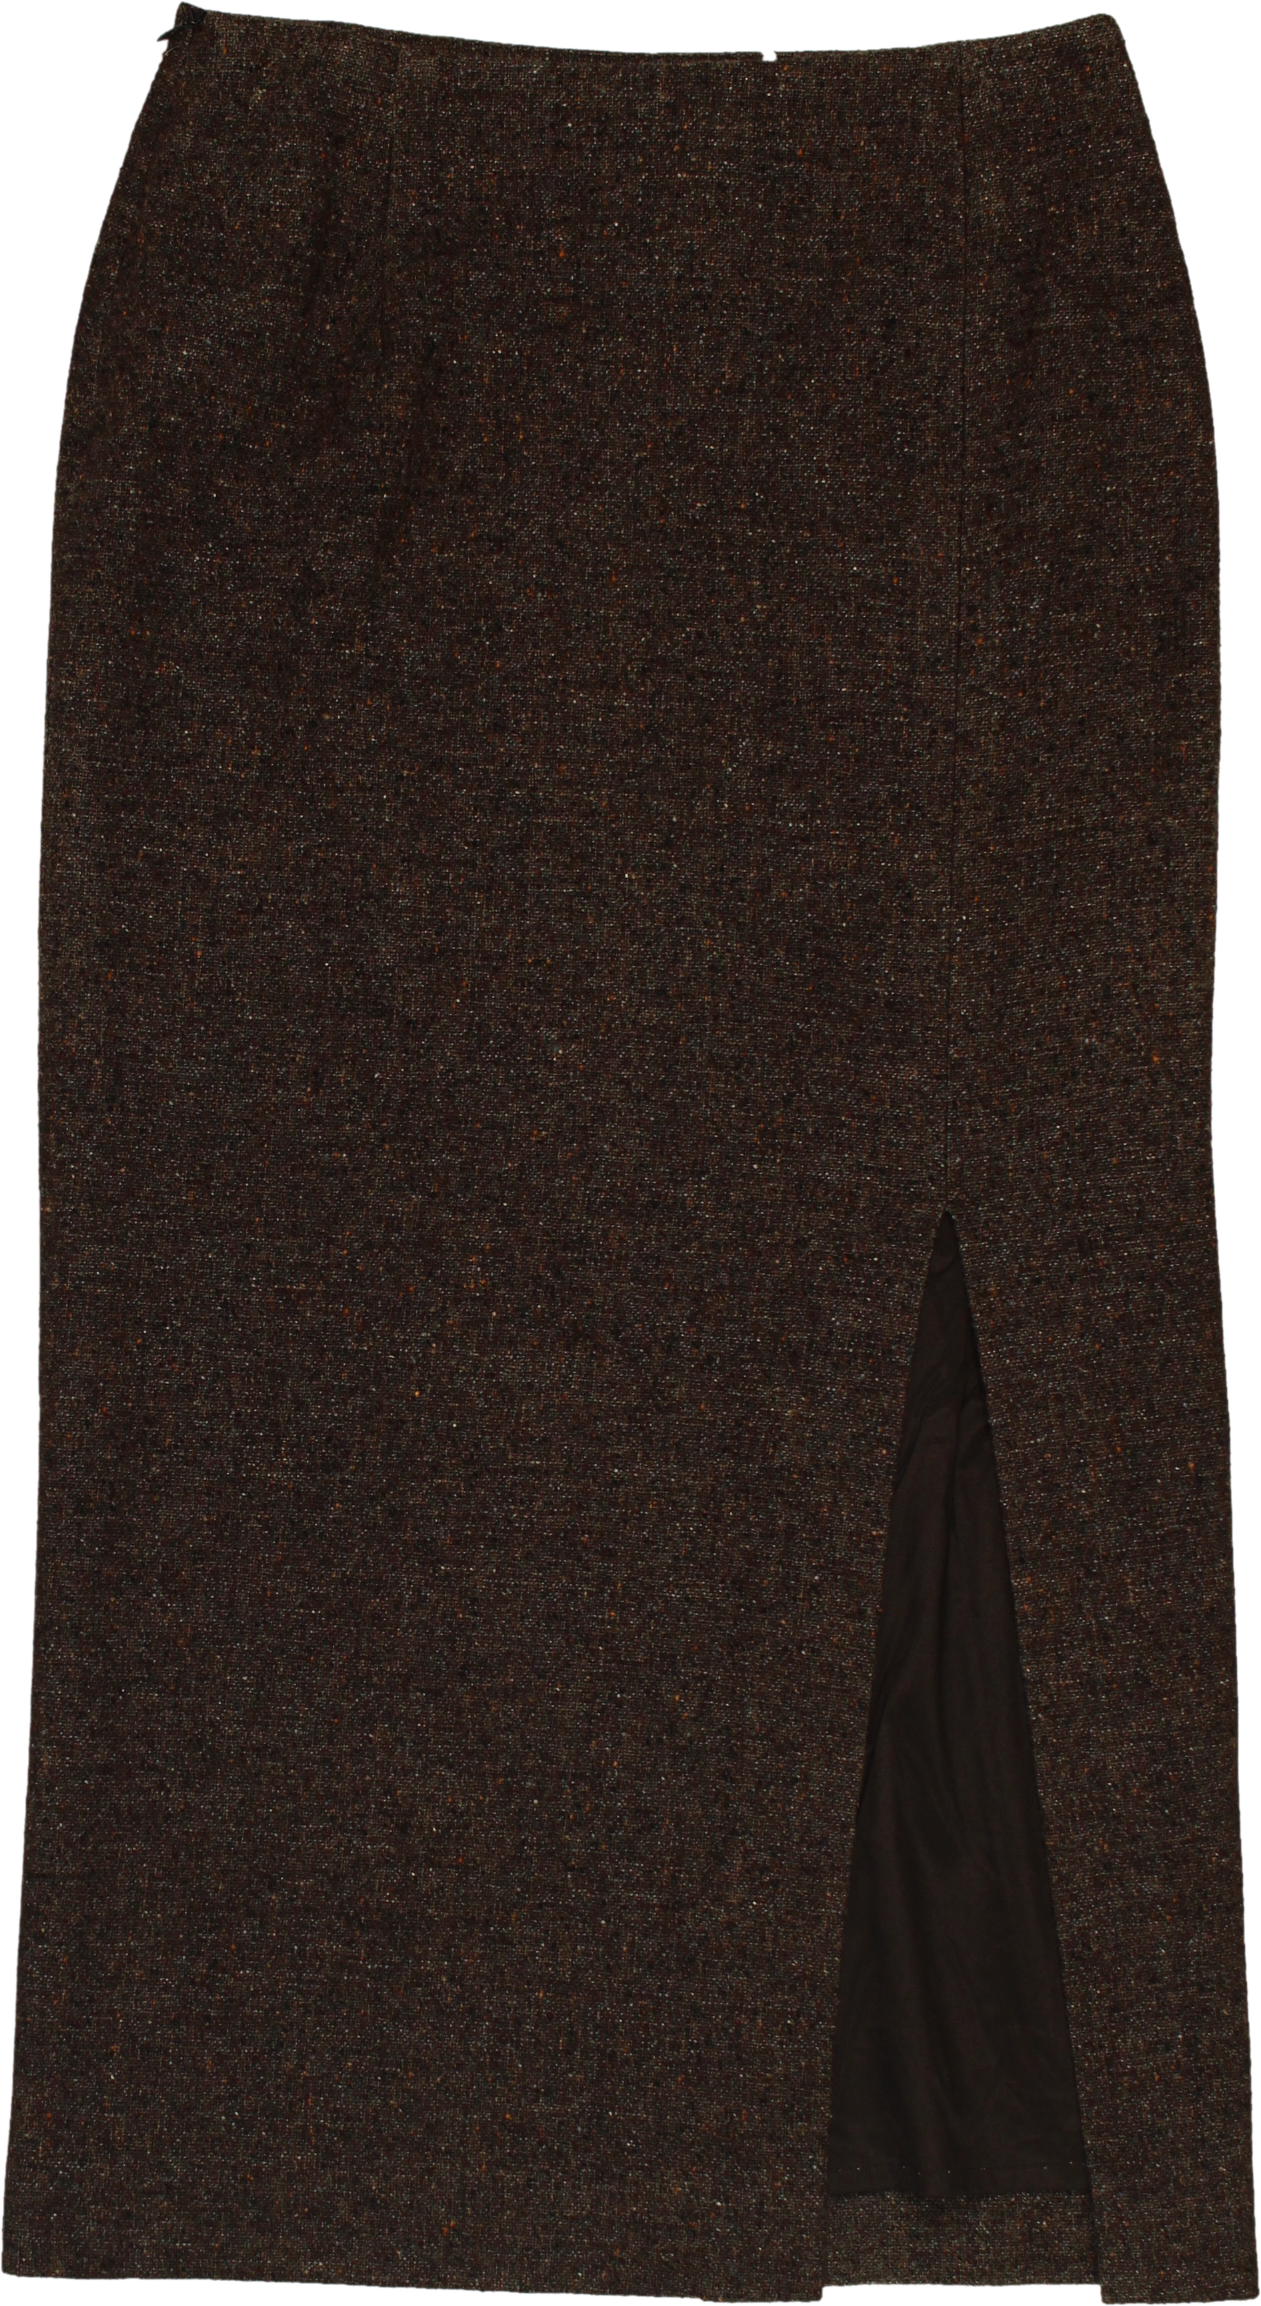 Metradamo - Wool Skirt- ThriftTale.com - Vintage and second handclothing